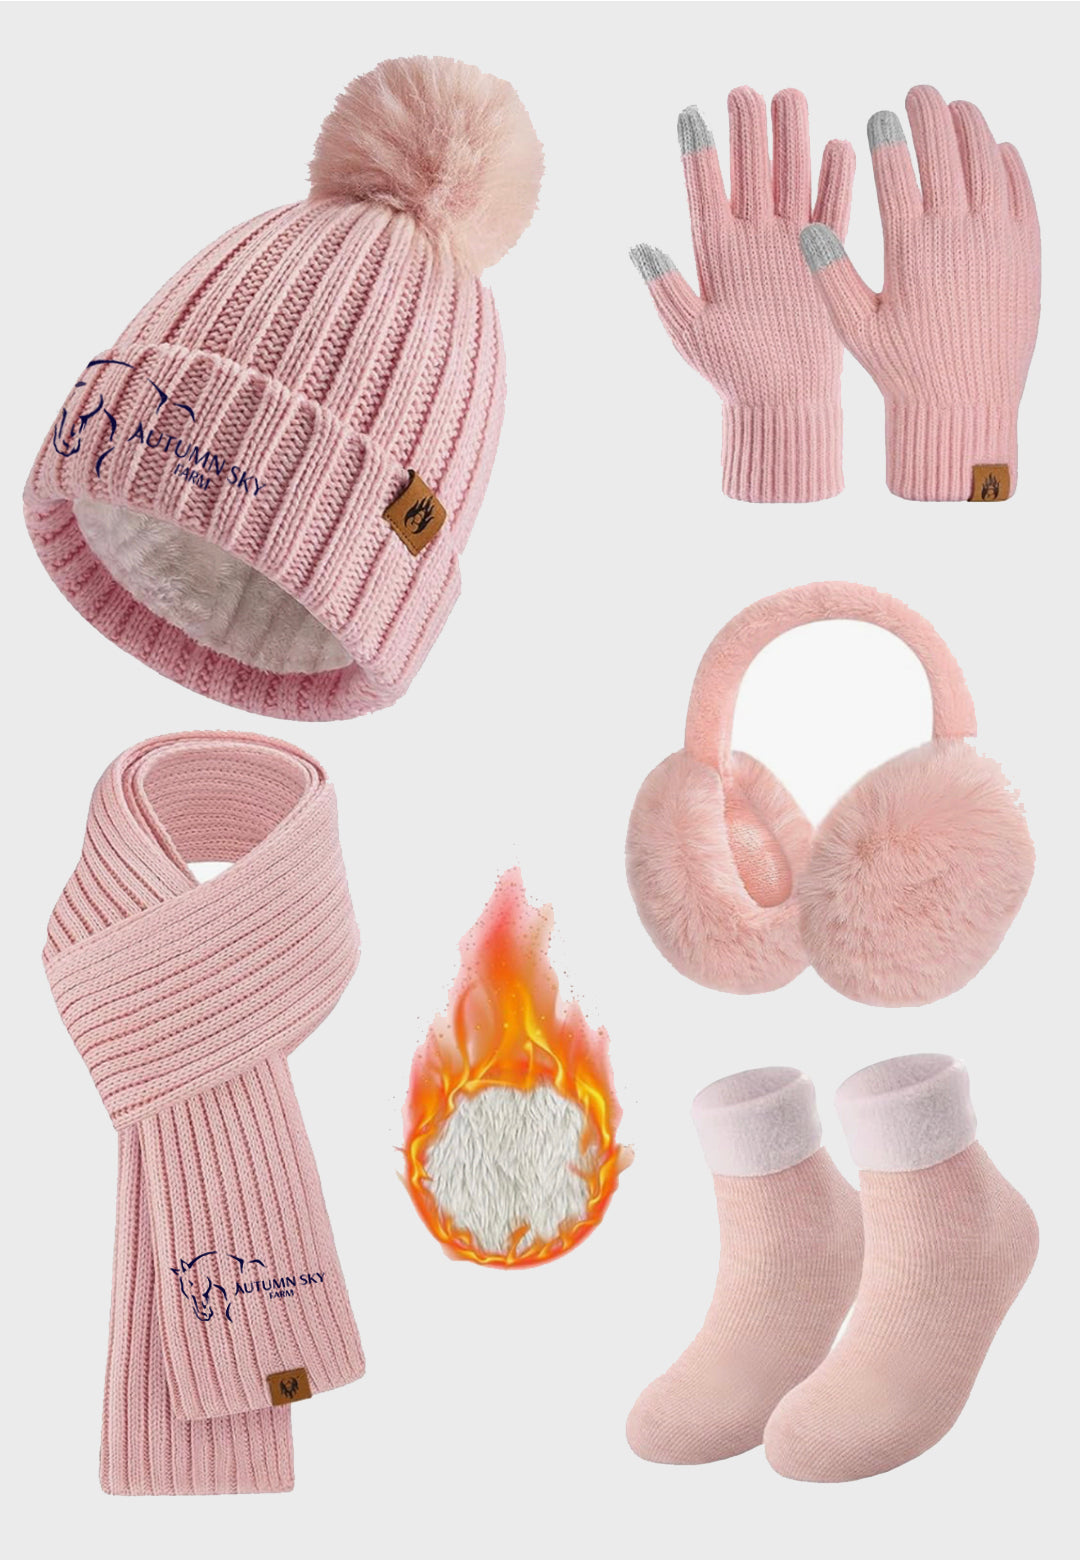 Autumn Sky Farm Winter Beanie Hat Scarf Gloves Ear Muffs Socks Set